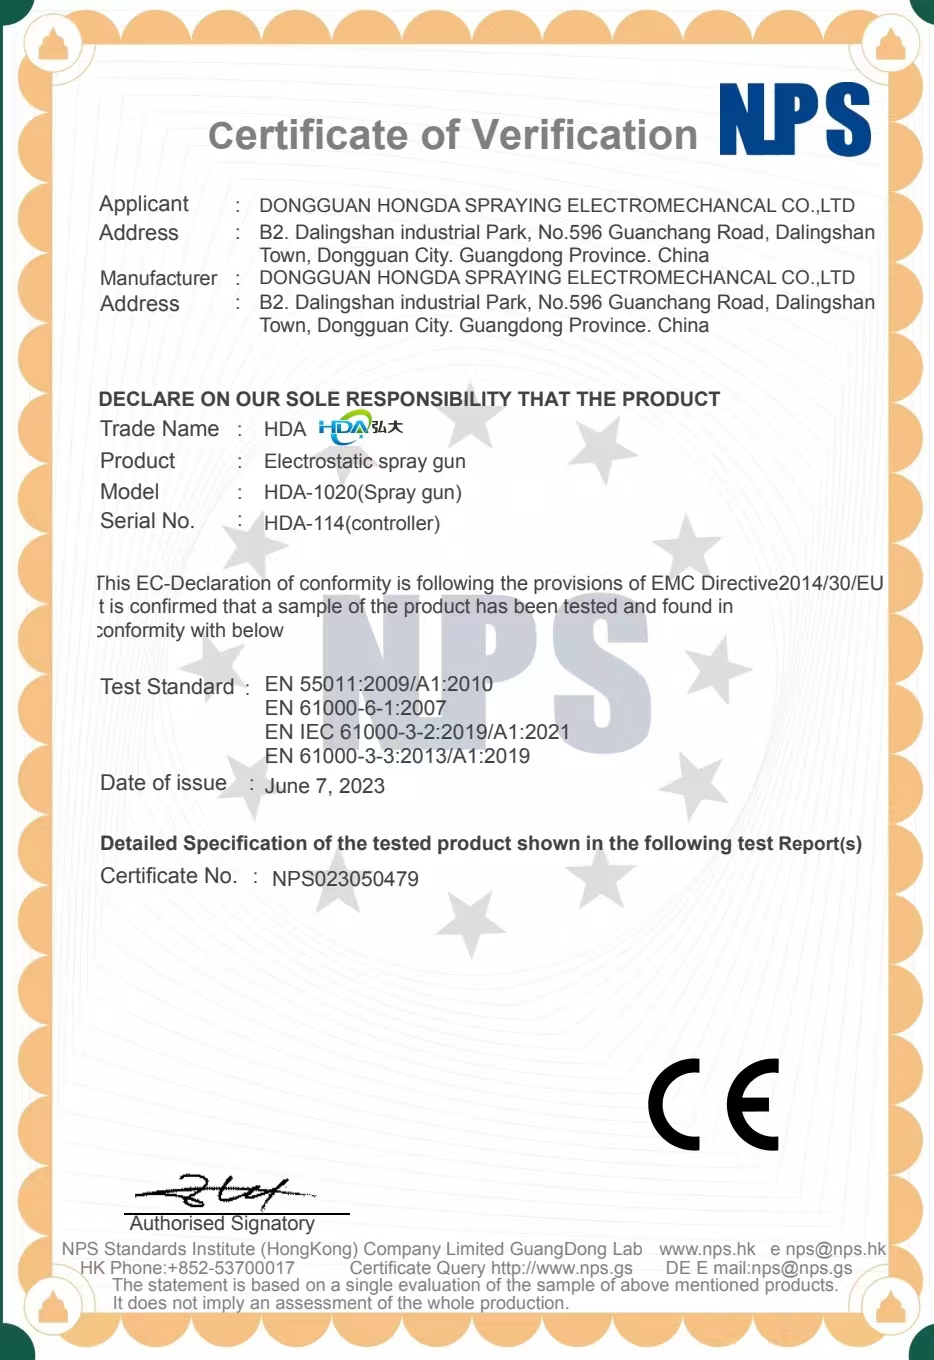 the standard CE 2004/30/EU for electrostatic spray system |hdaspraygun